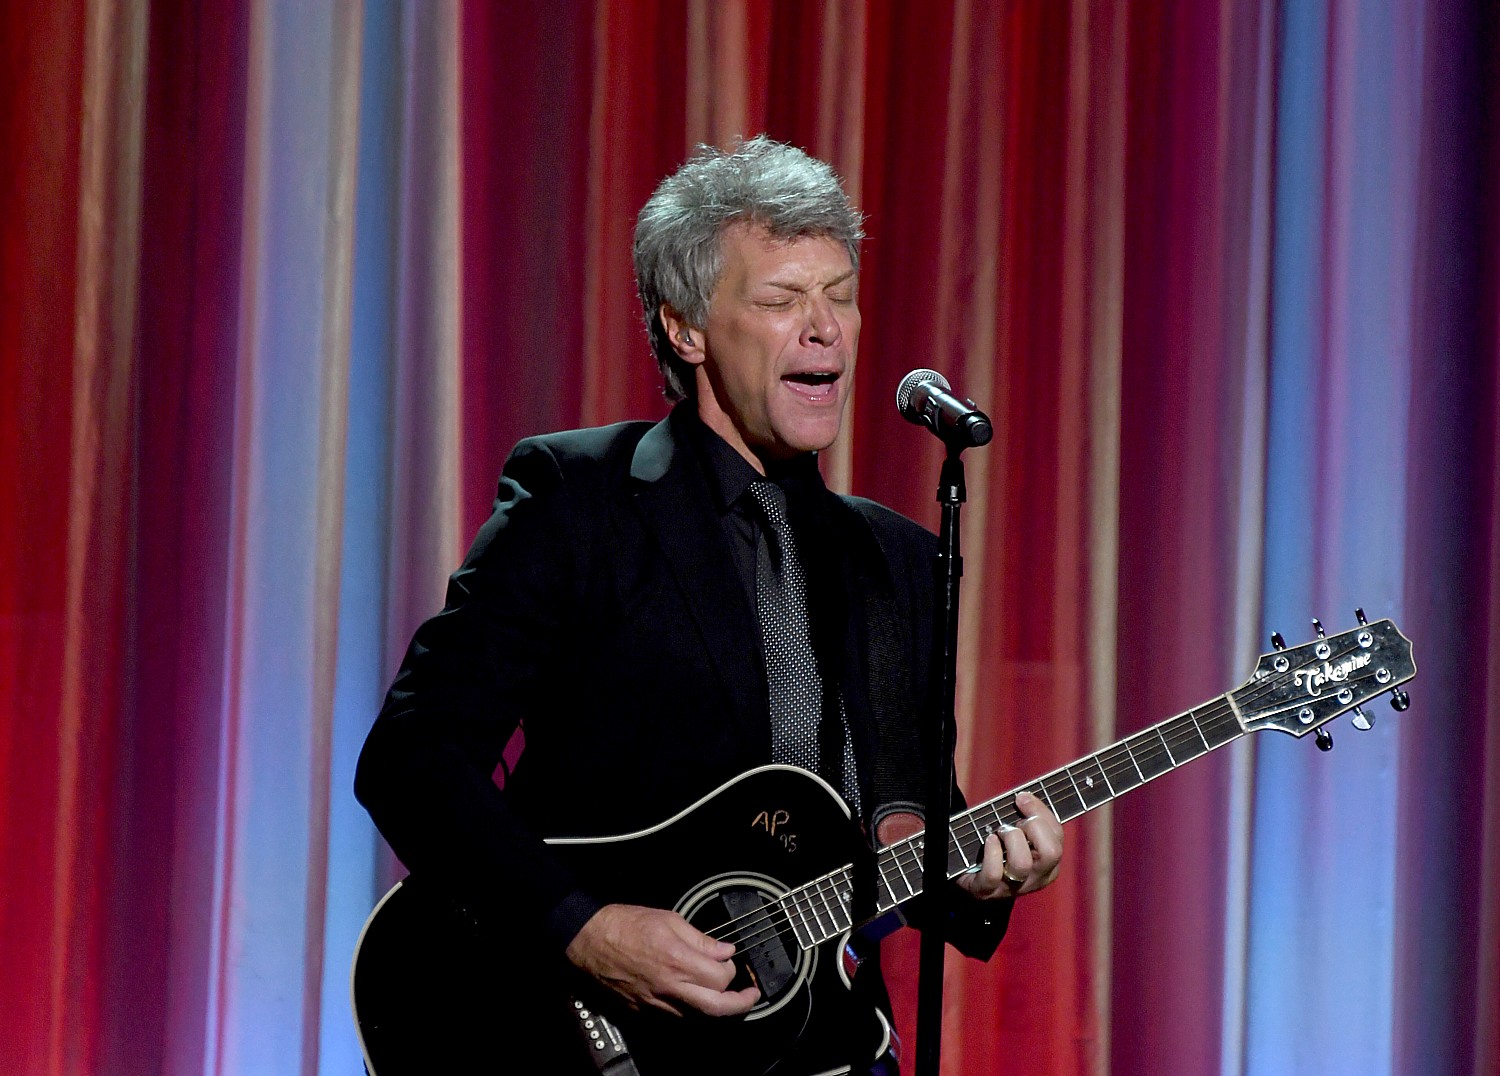 Jon Bon Jovi performs at the Clinton Global Citizen Awards 2016